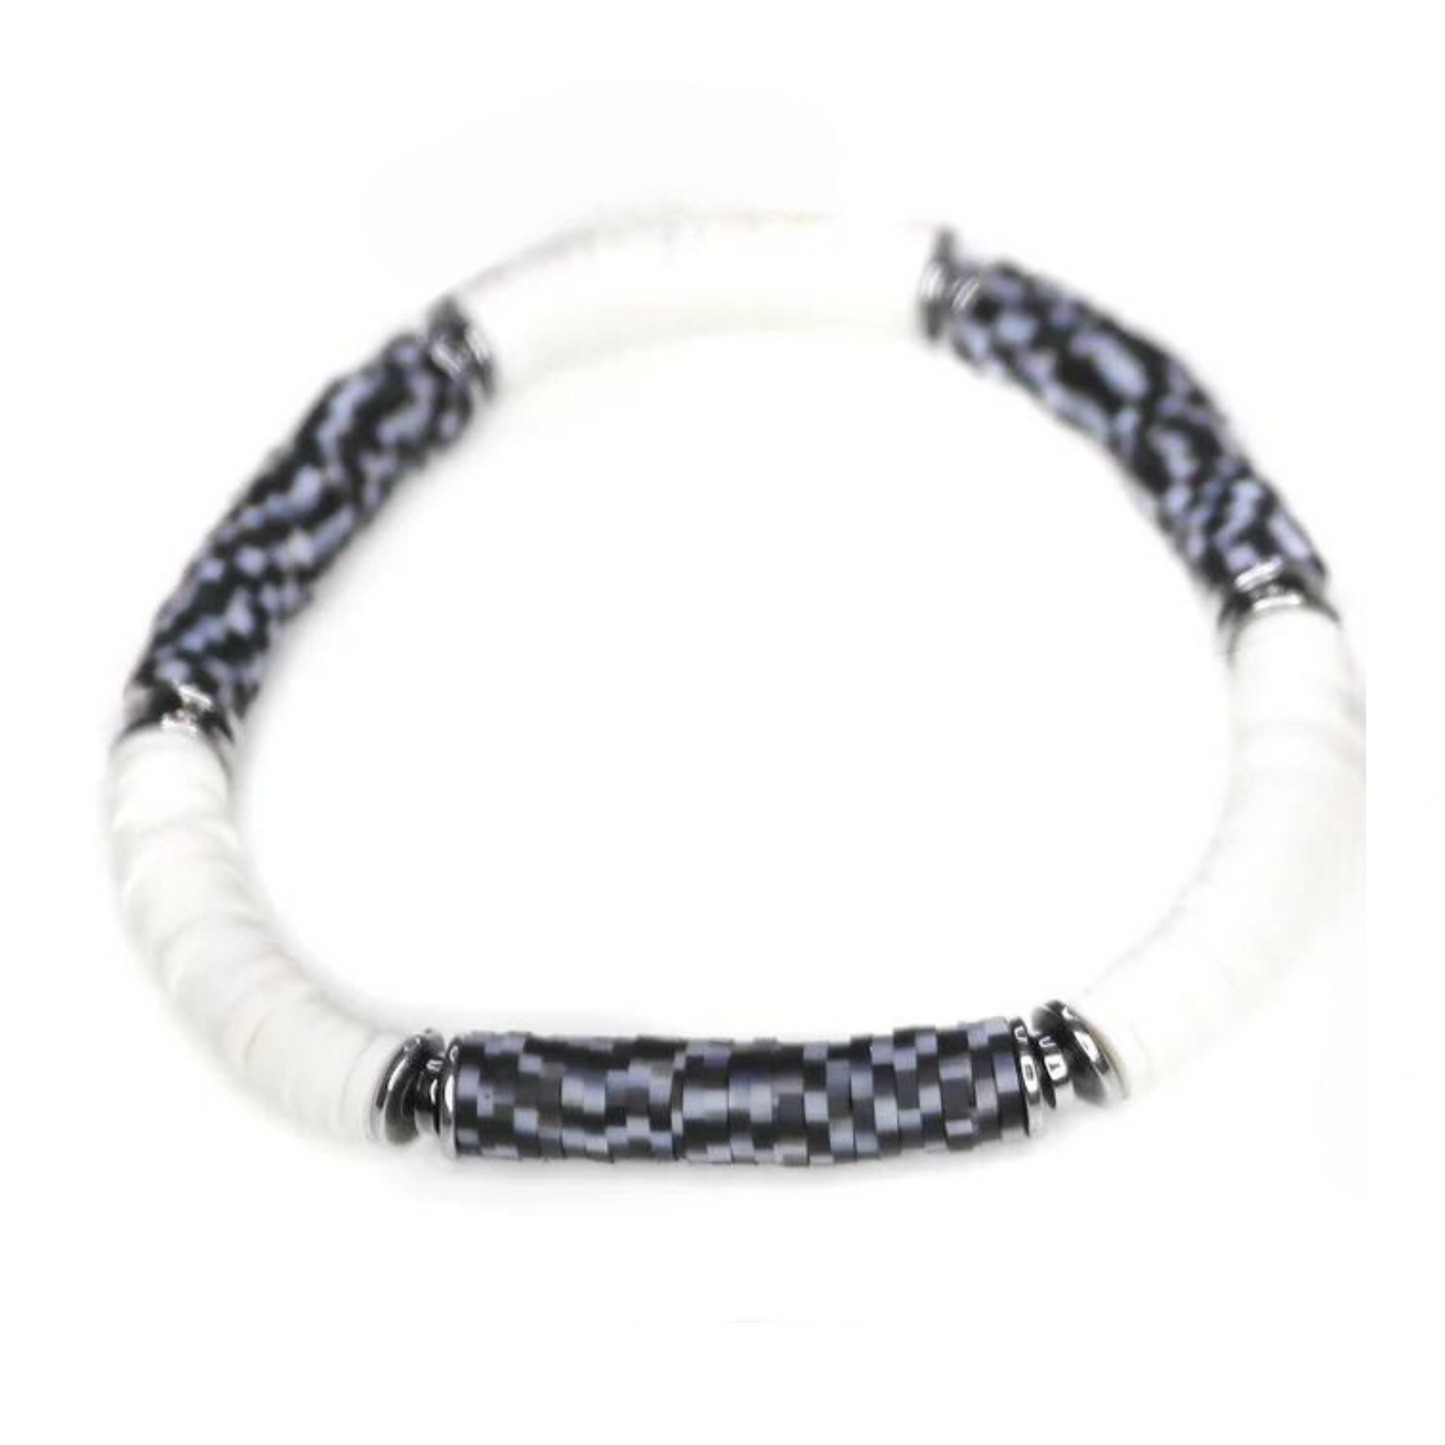 Polymer Clay Beads Bracelet